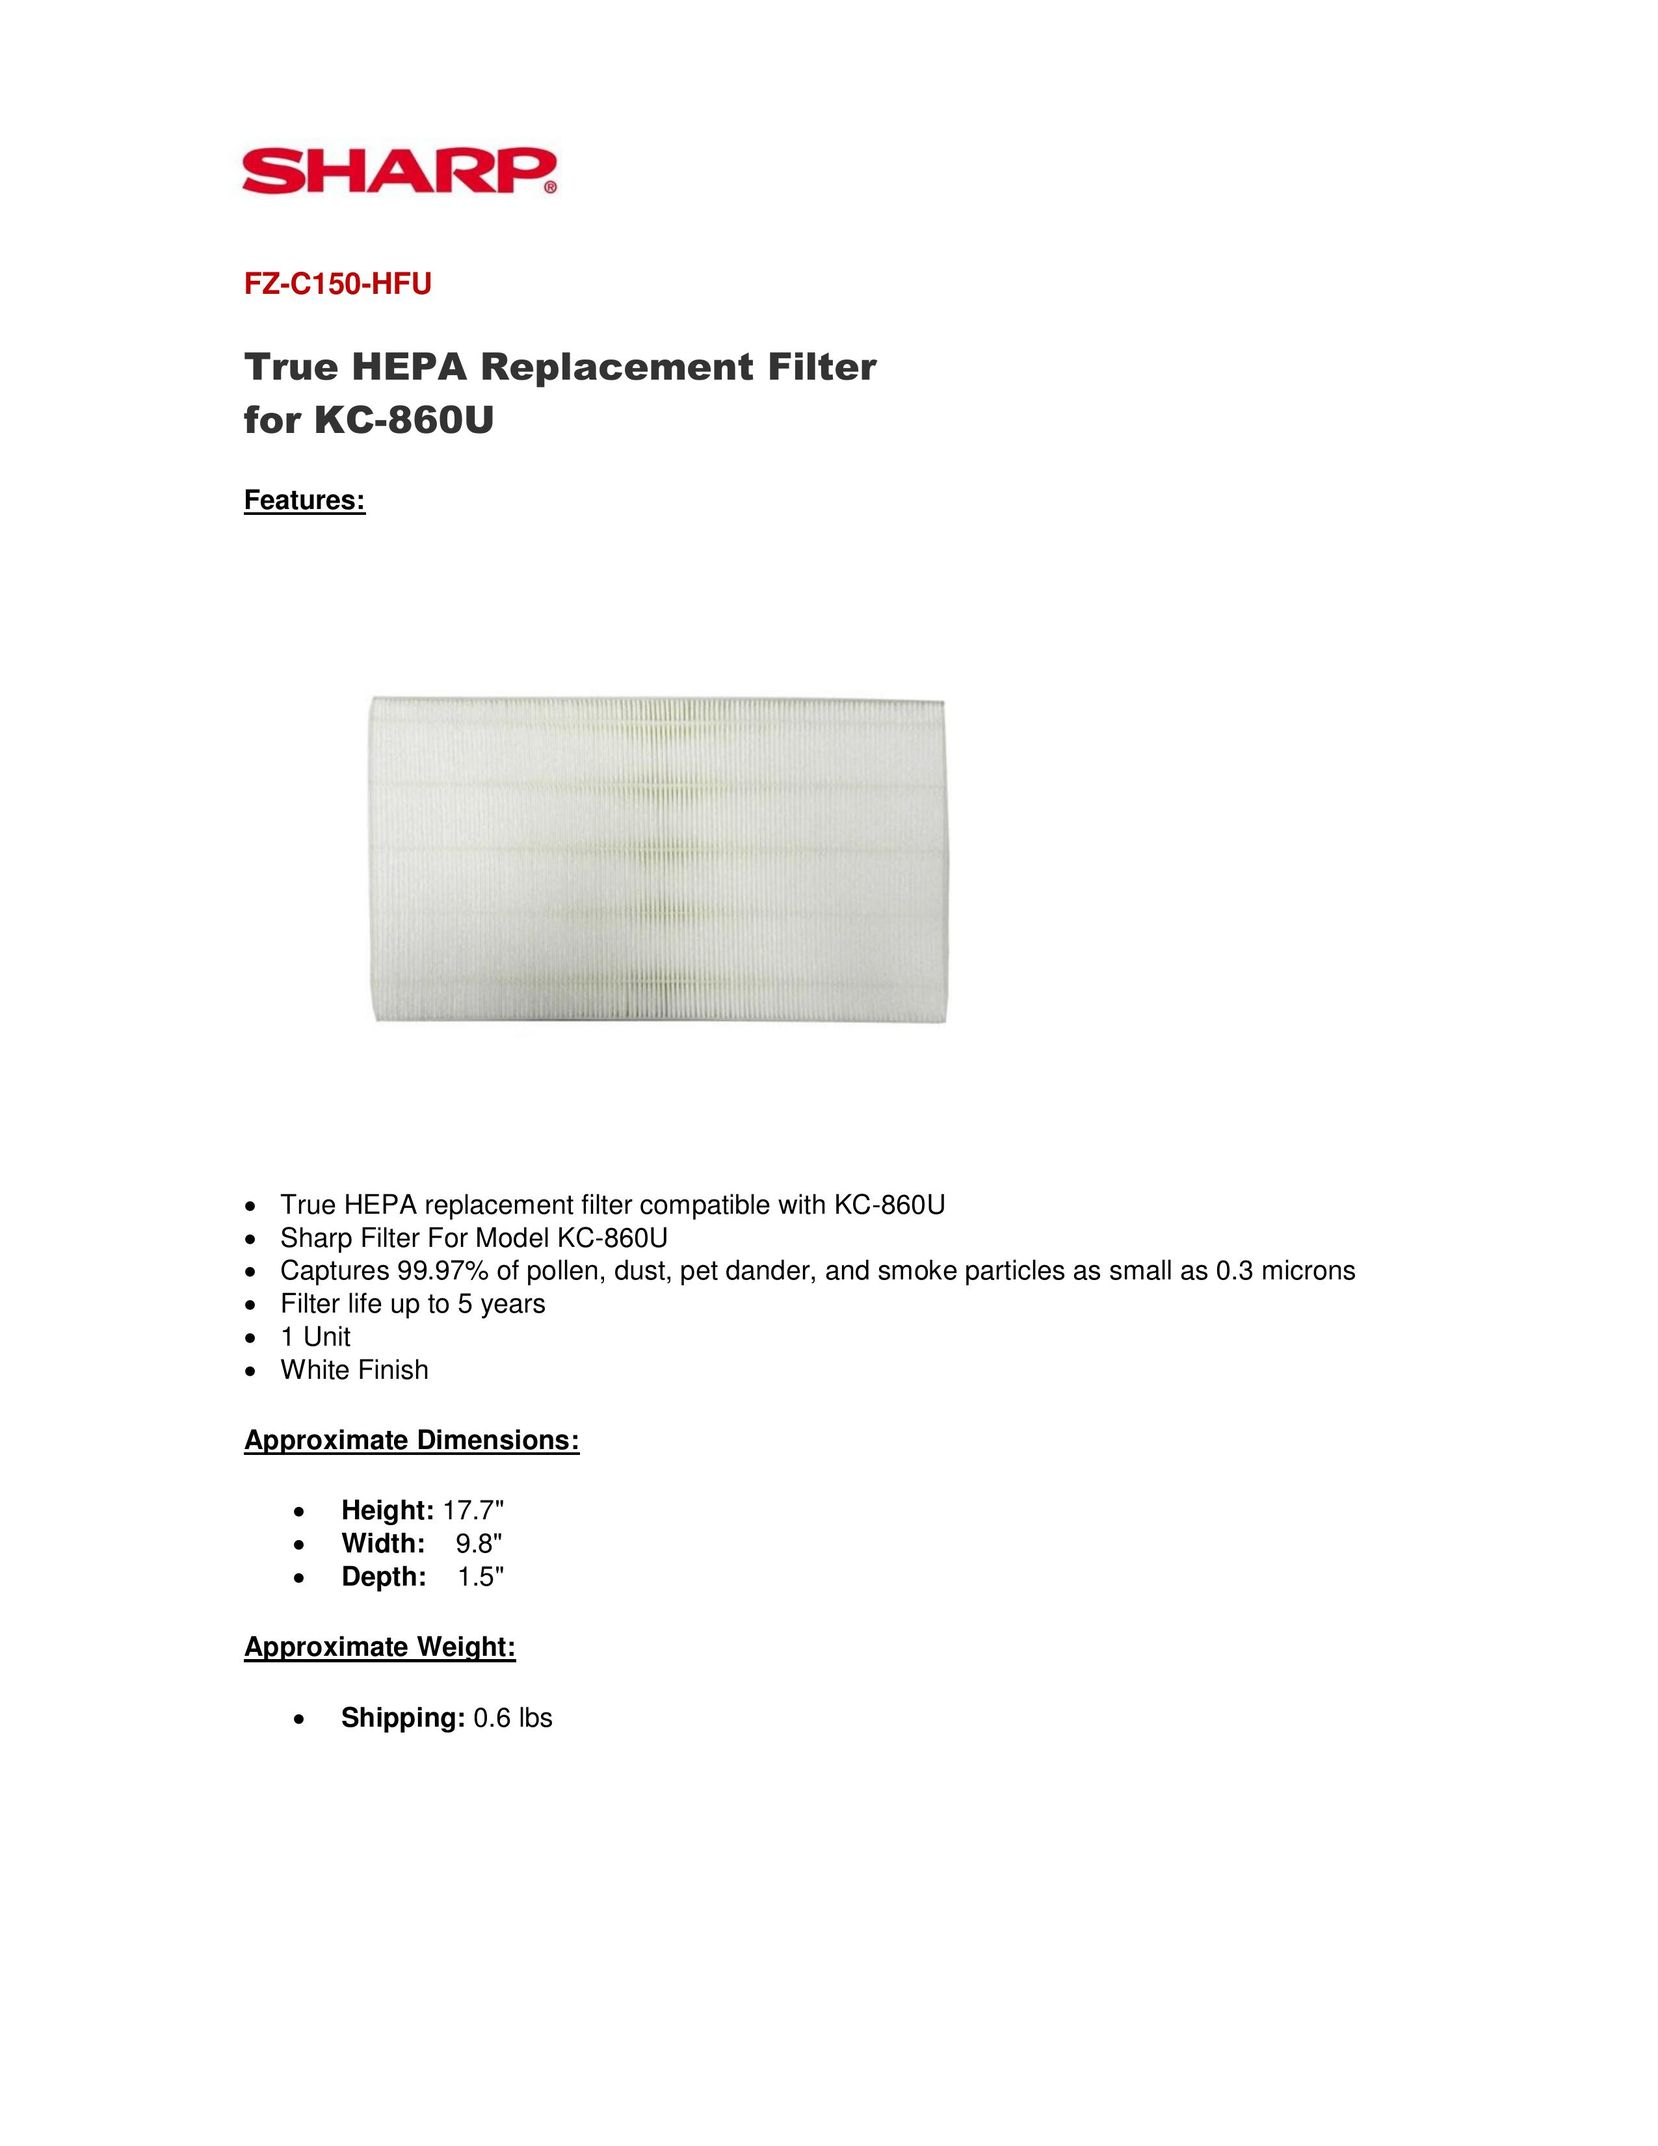 Sharp FZC150HFU Air Cleaner User Manual